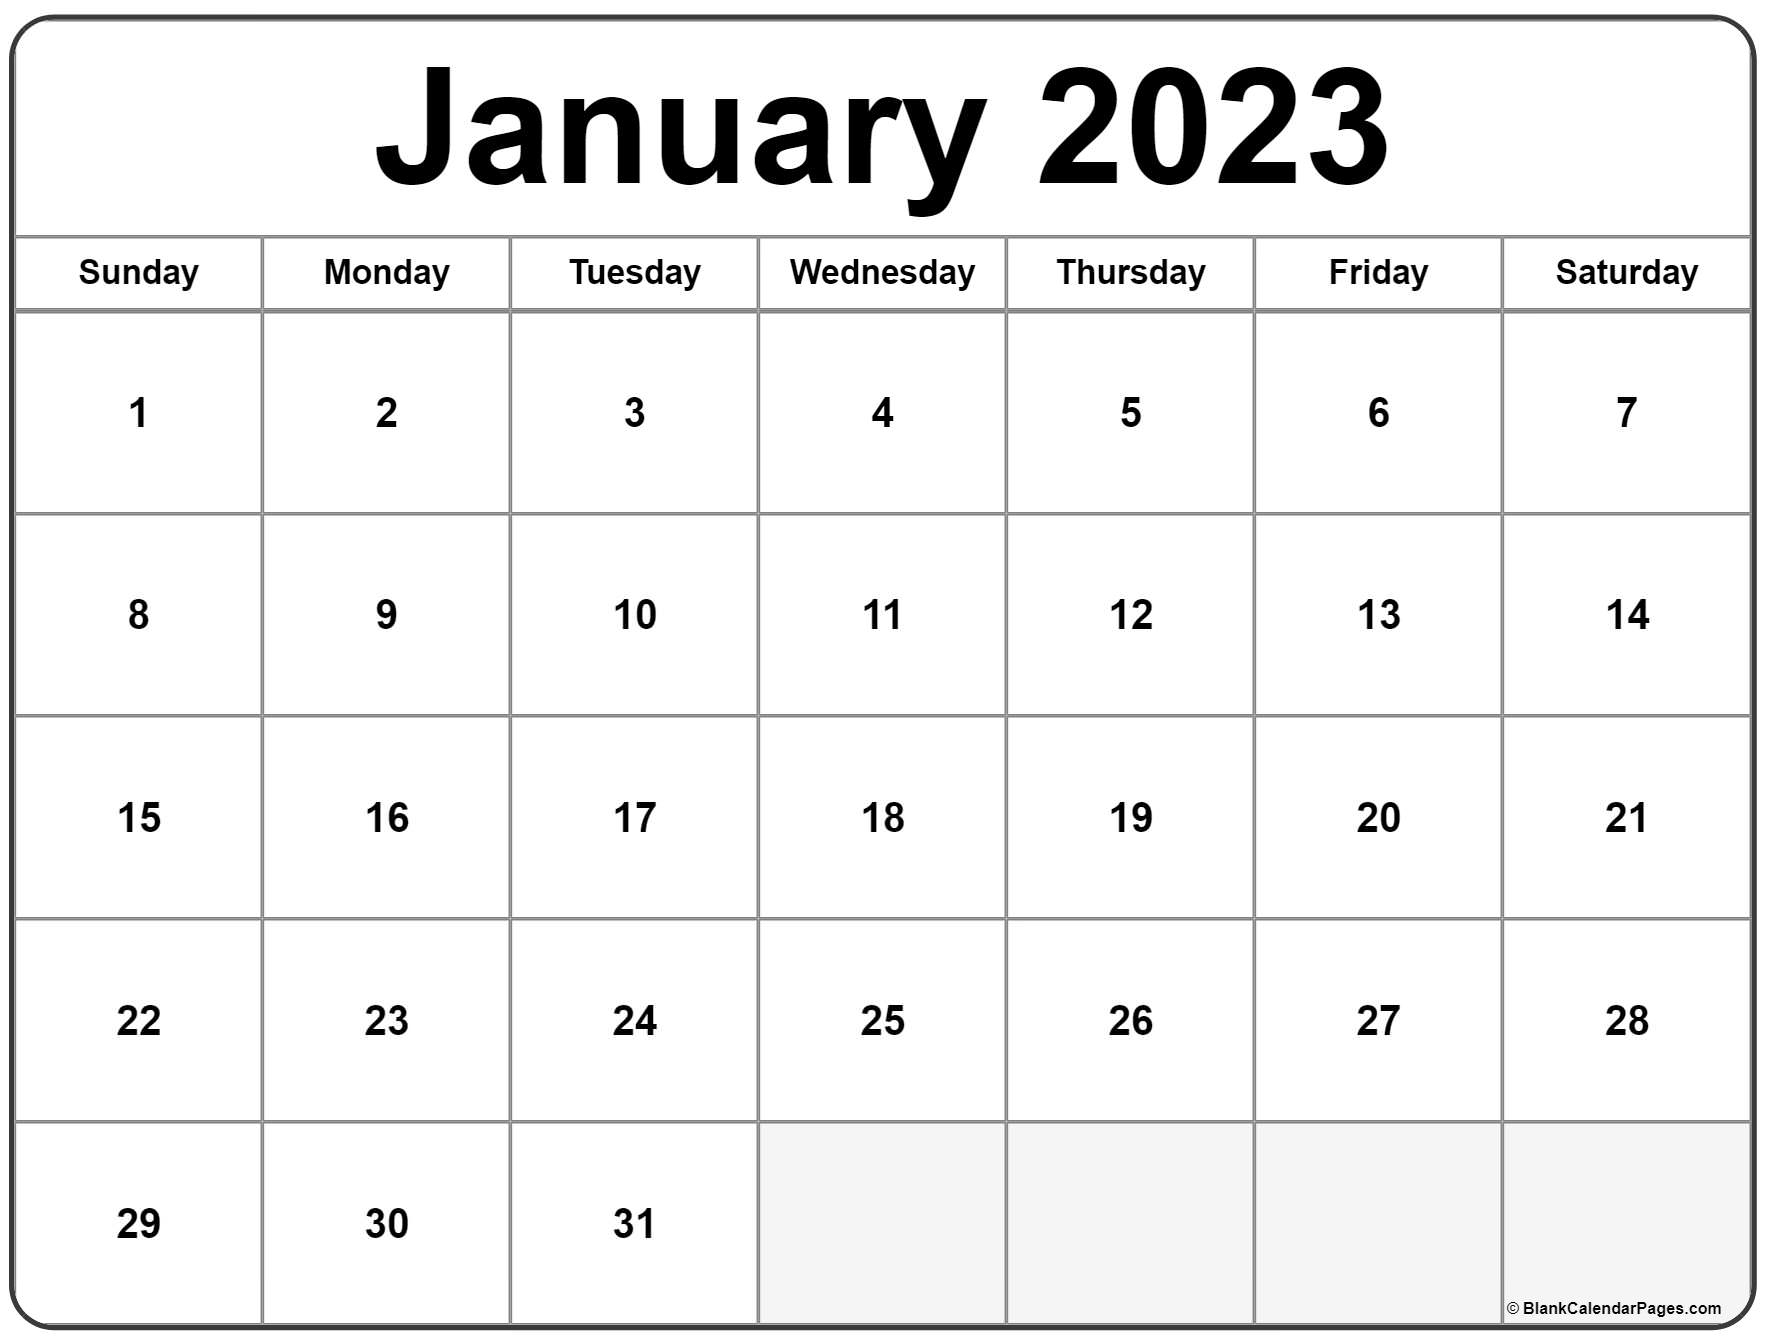 January 2023 Calendar | Free Printable Calendar Templates with Free Vertical Printable Calendars For April 2023 Calendar Holiday Usa 2023